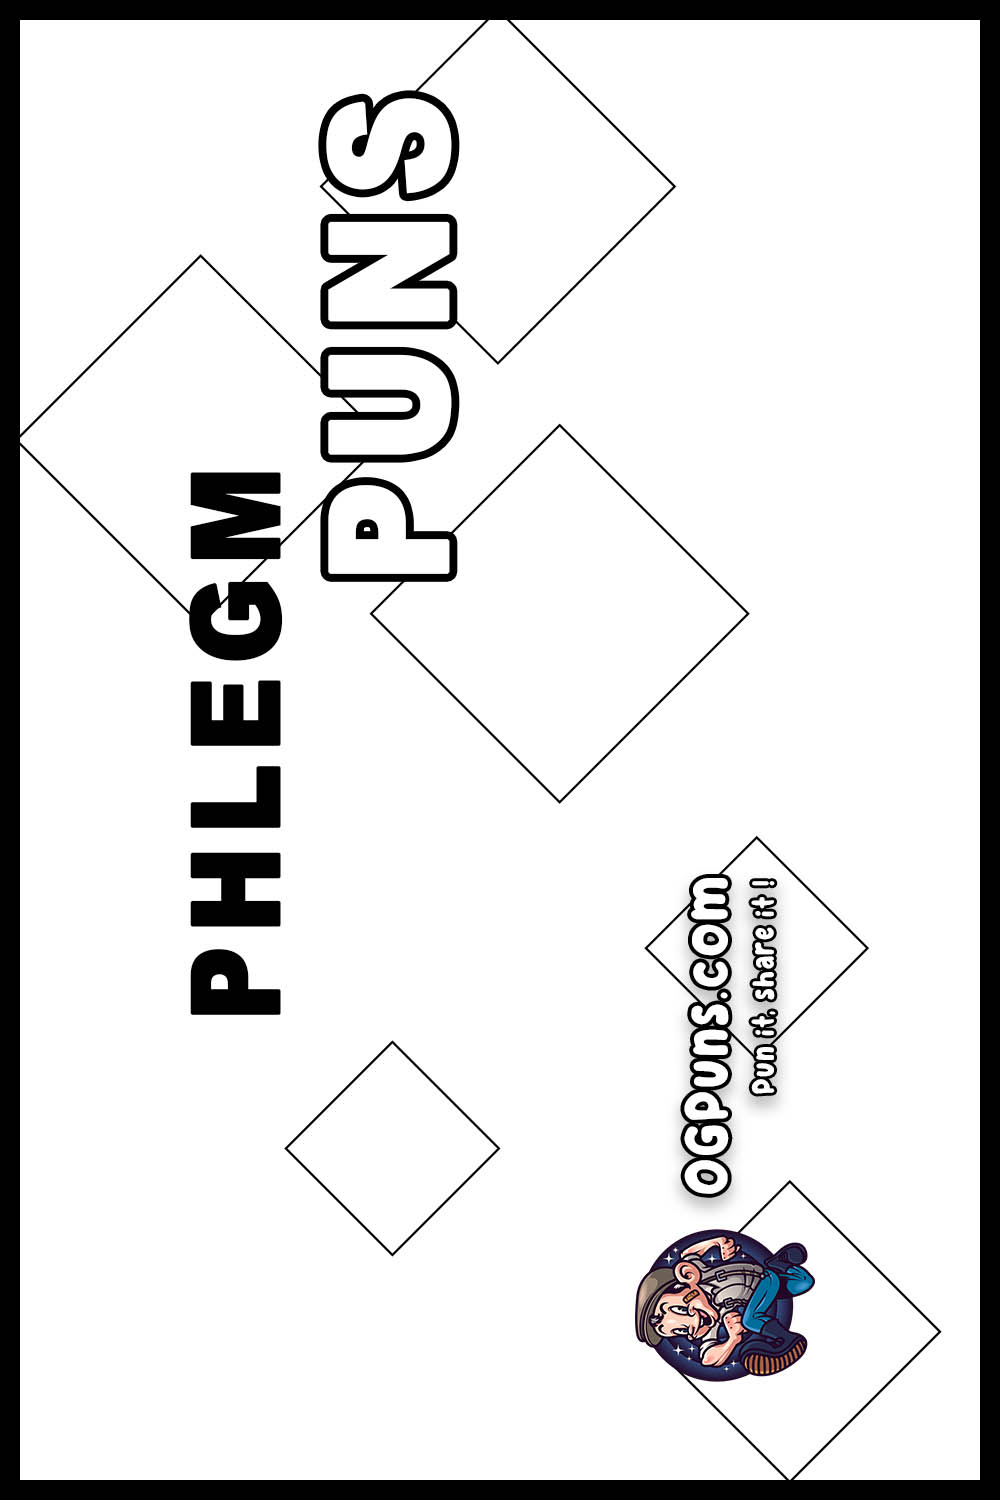 Phlegm puns Pinterest Image